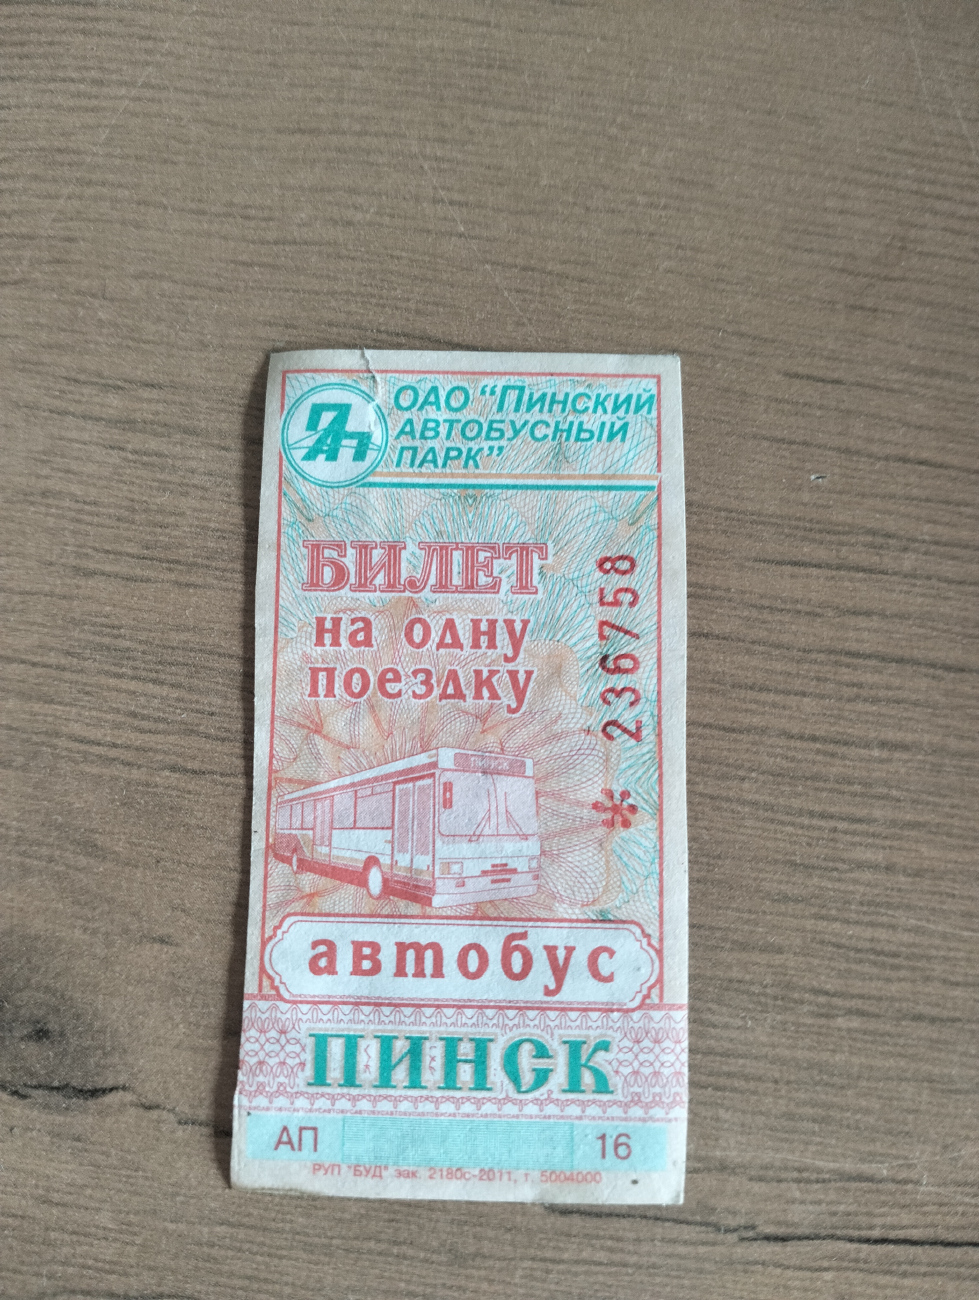 Pinsk — Tickets